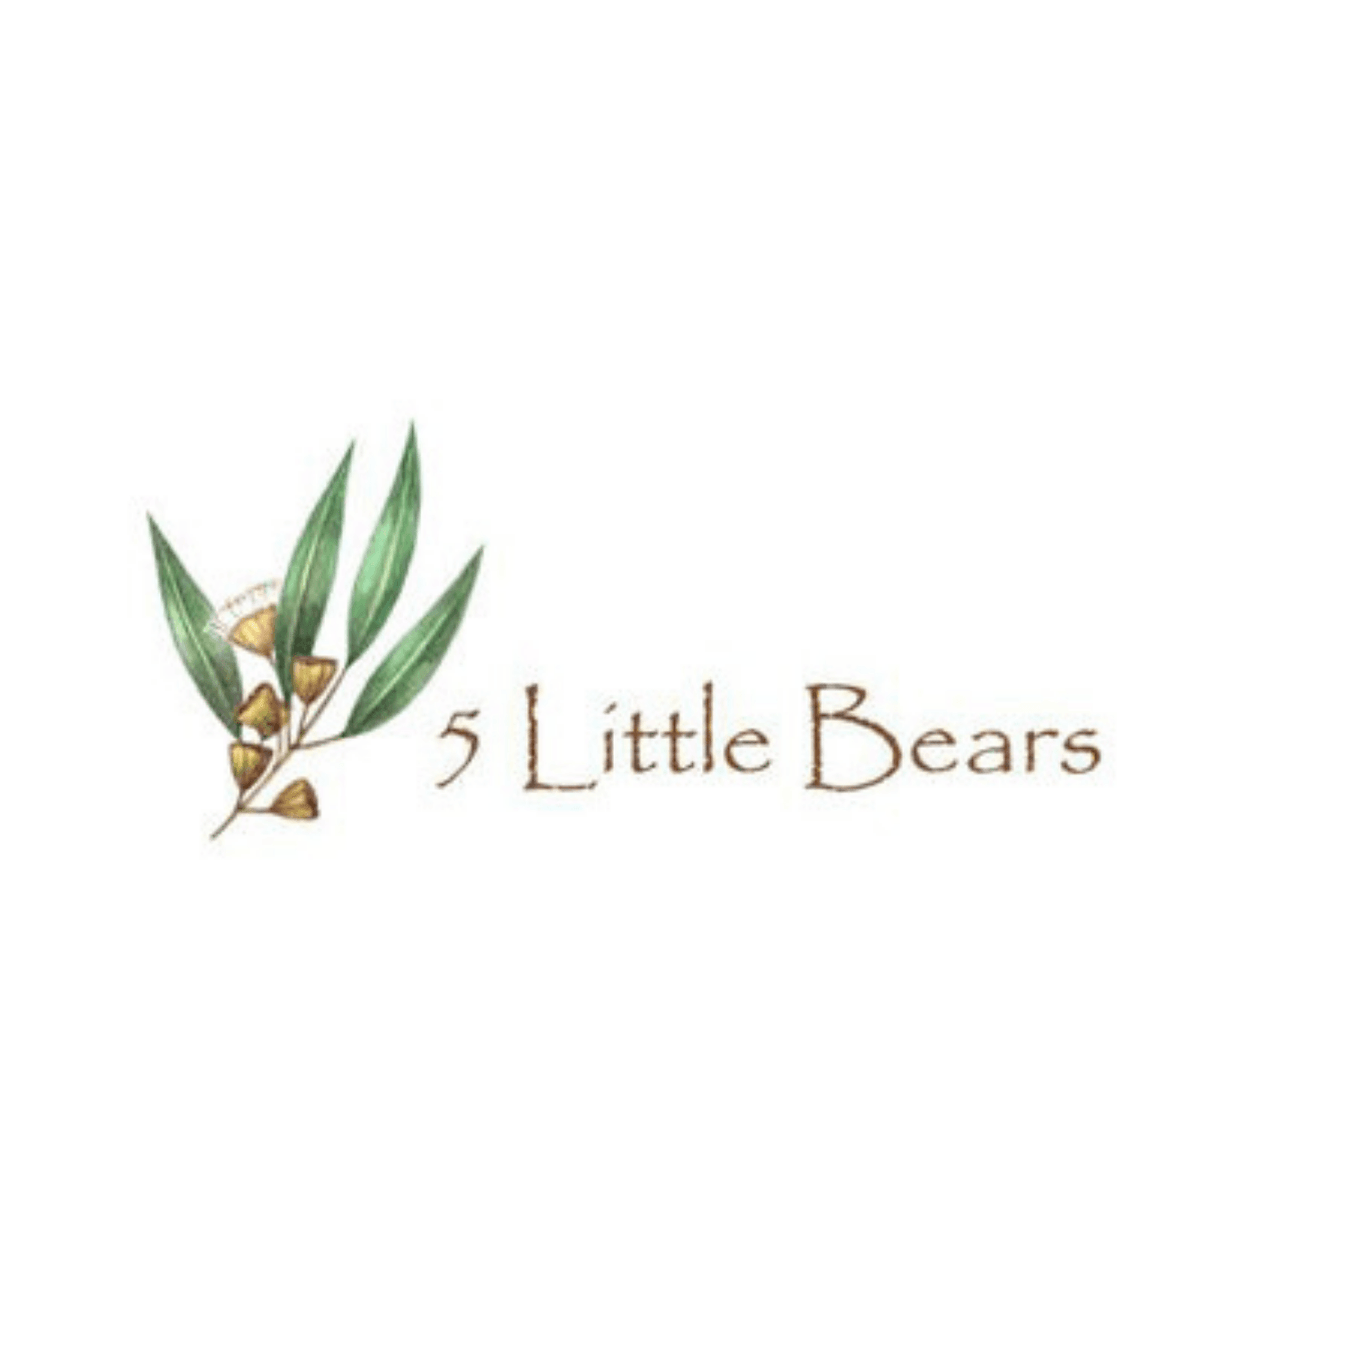 5 Little Bears Ecosystem Range Australia - My Playroom 